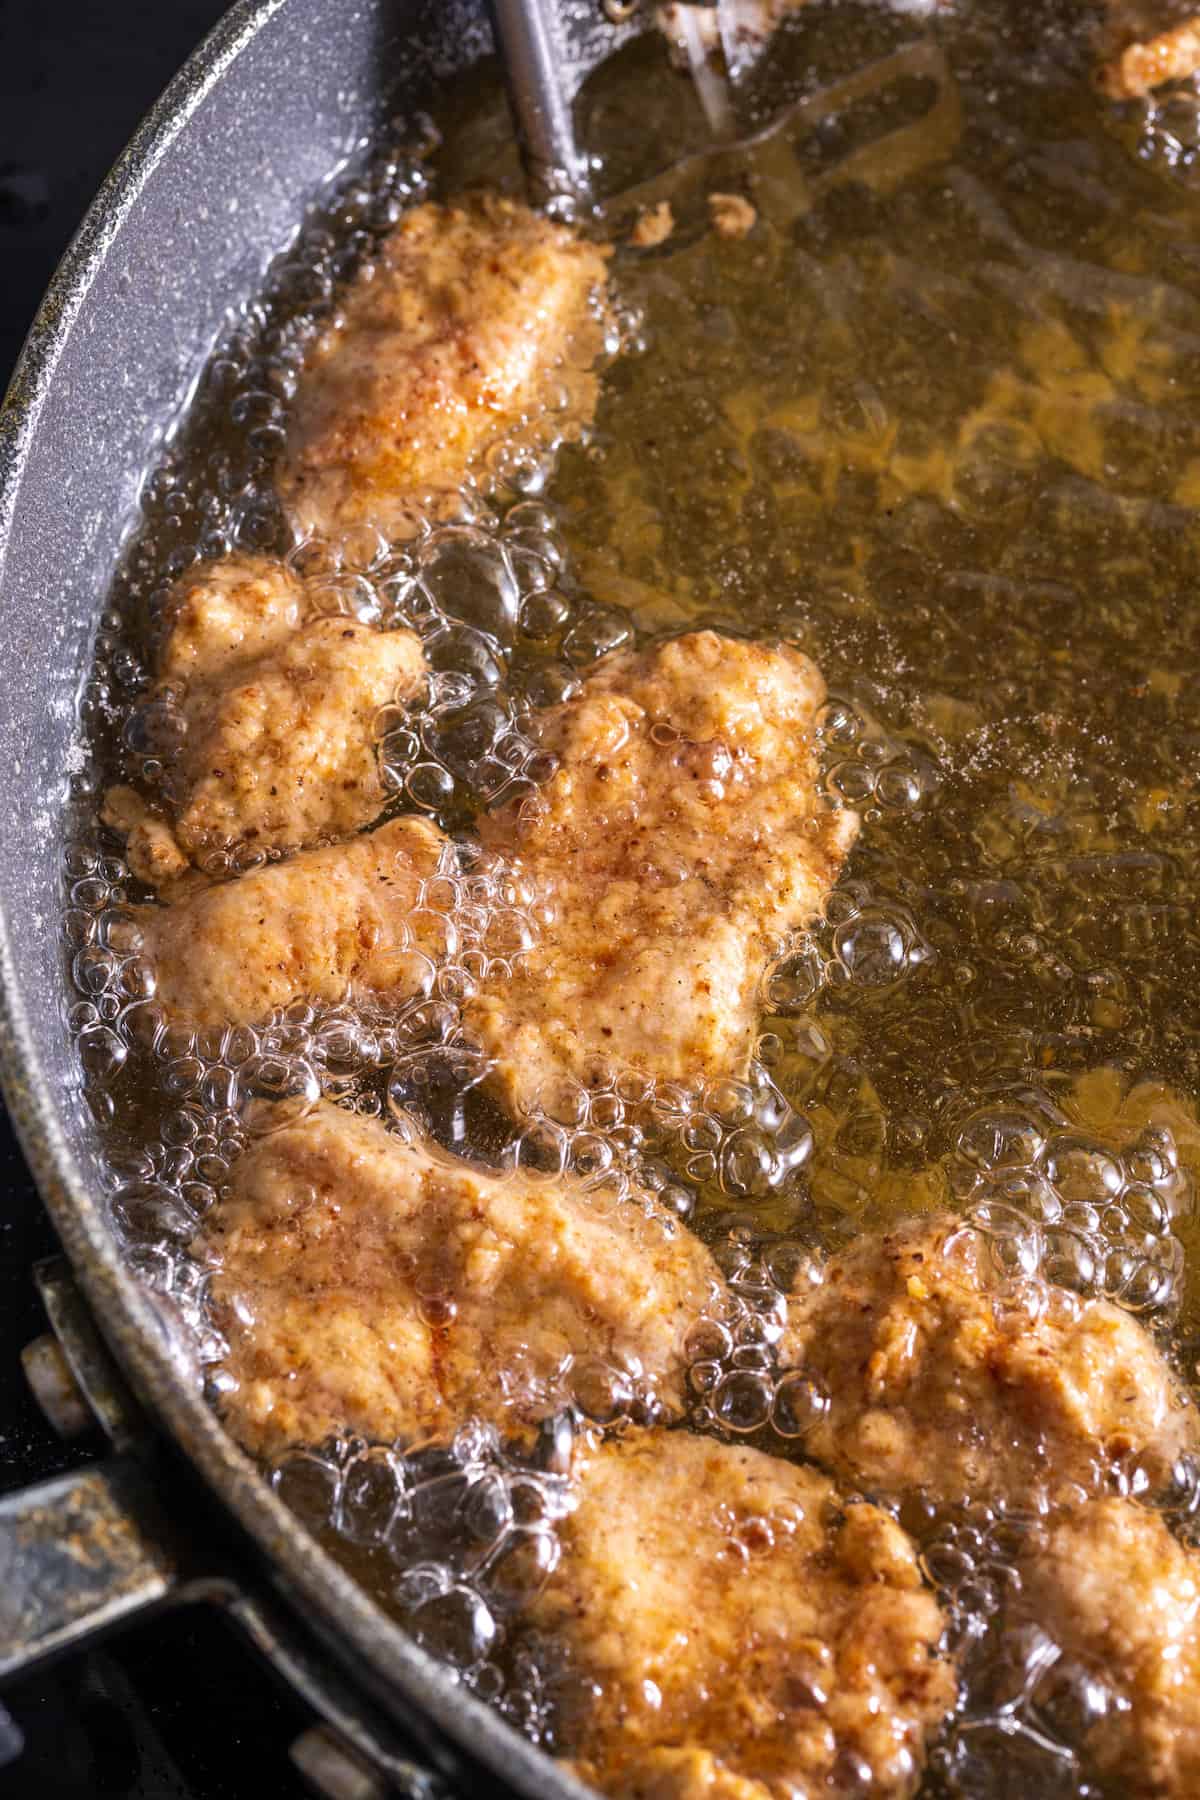 Gluten-free popcorn chicken deep frying in a skillet with oil.